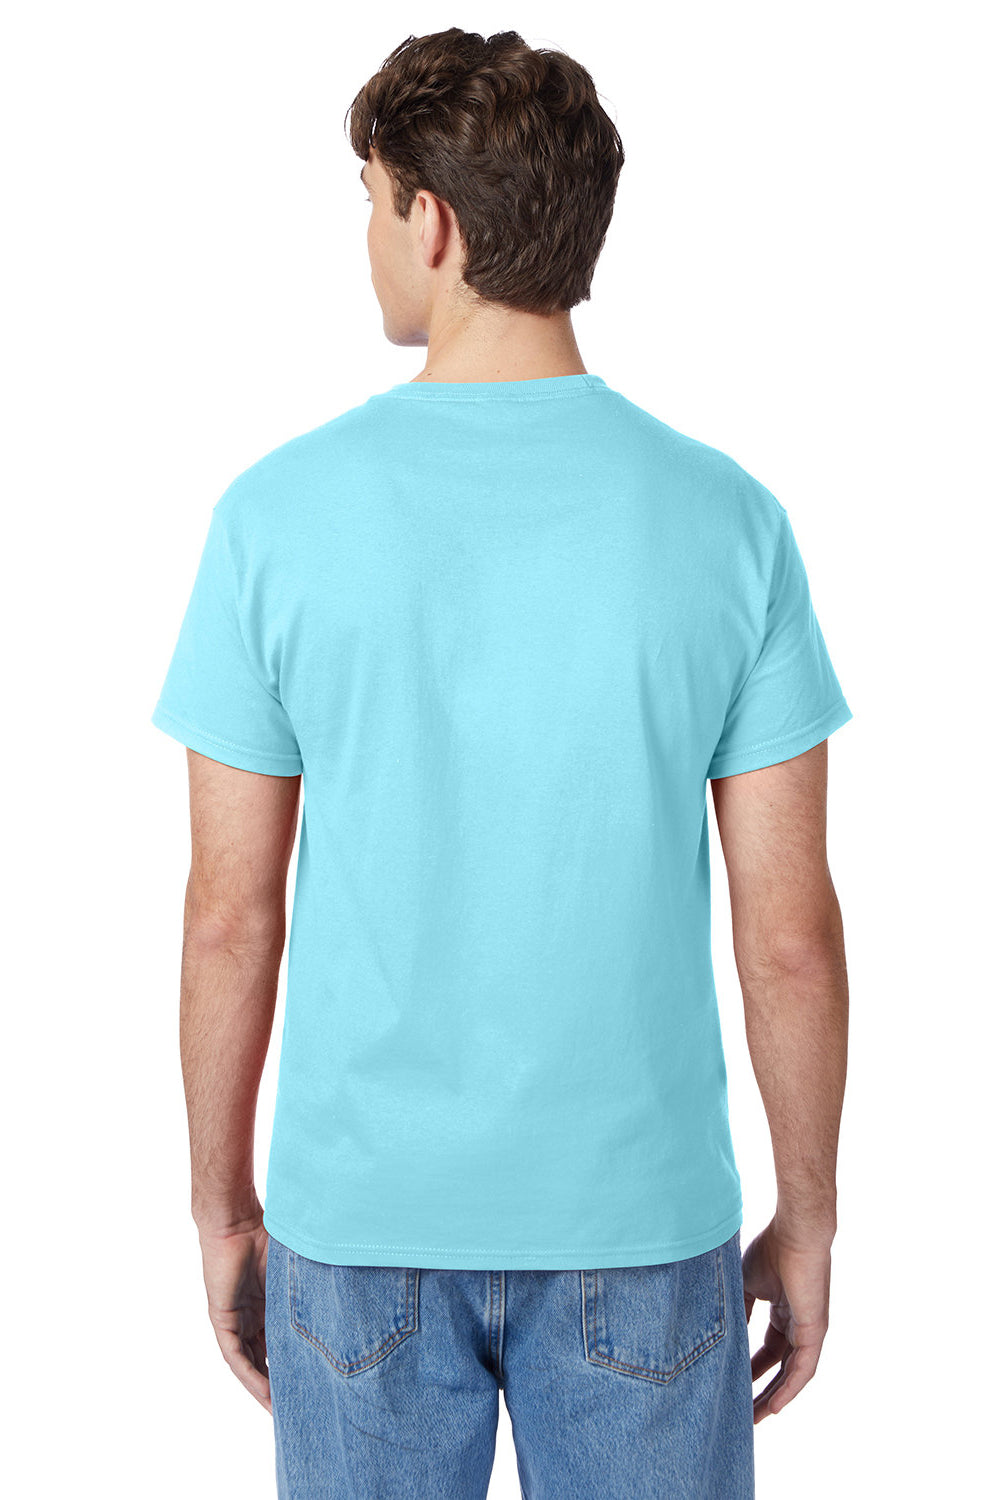 Hanes 5250/5250T Mens ComfortSoft Short Sleeve Crewneck T-Shirt Clean Mint Blue Back